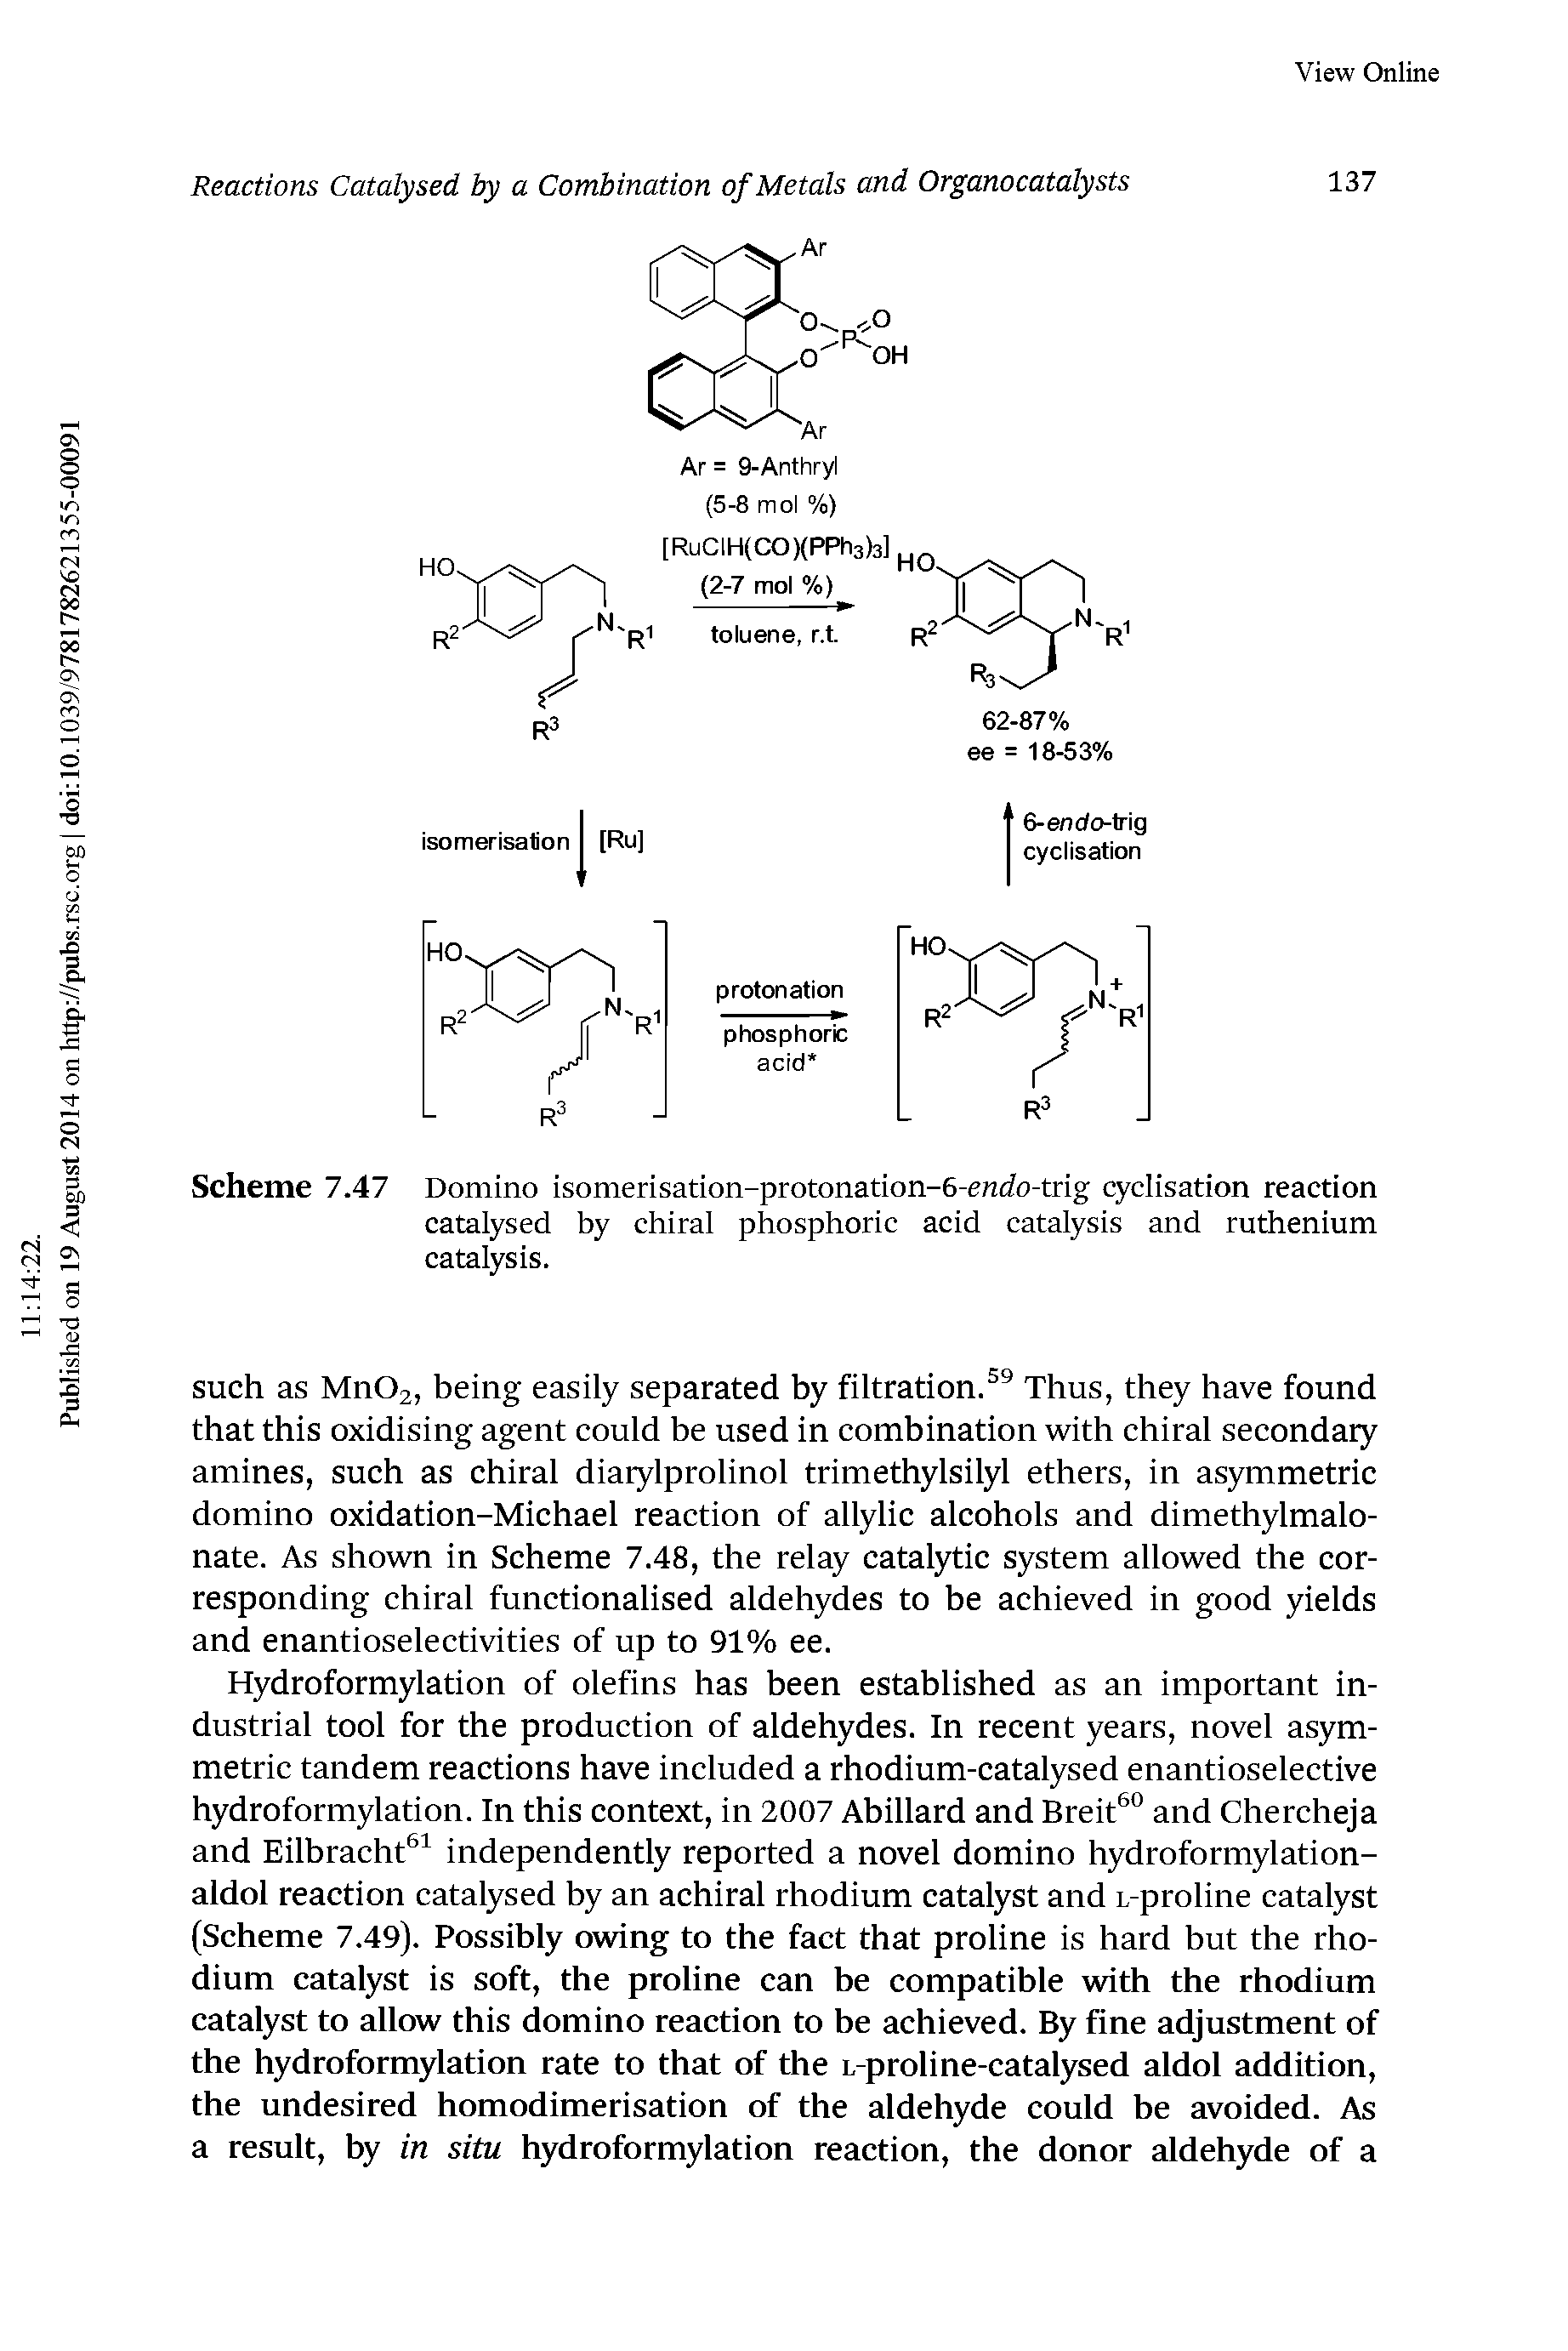 Scheme 7.47 Domino isomerisation-protonation-6-enrfo-trig cyclisation reaction catalysed by chiral phosphoric acid catalysis and ruthenium catalysis.